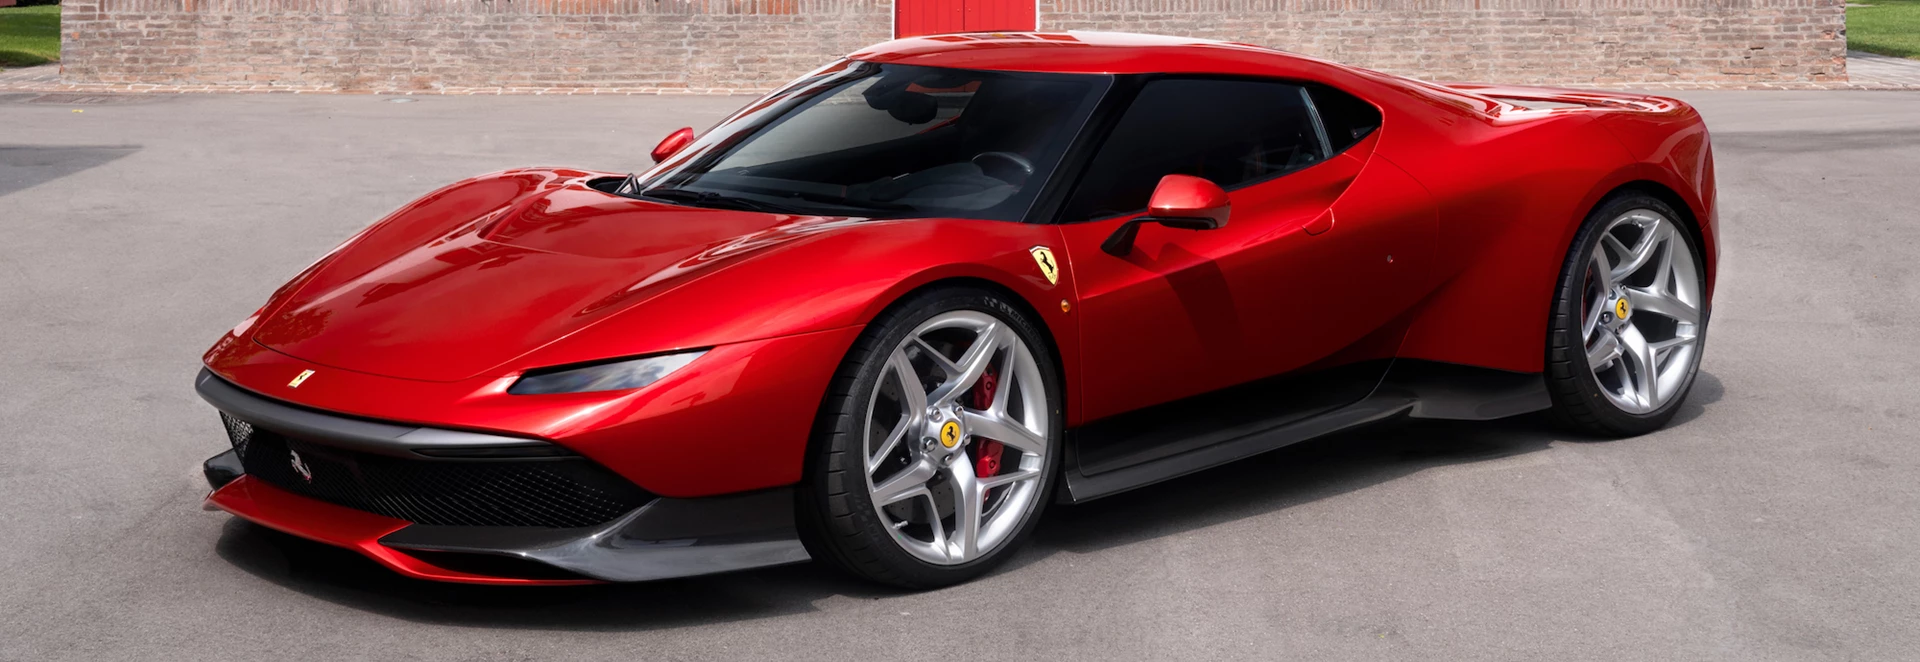 Ferrari reveals F40-inspired one-off model